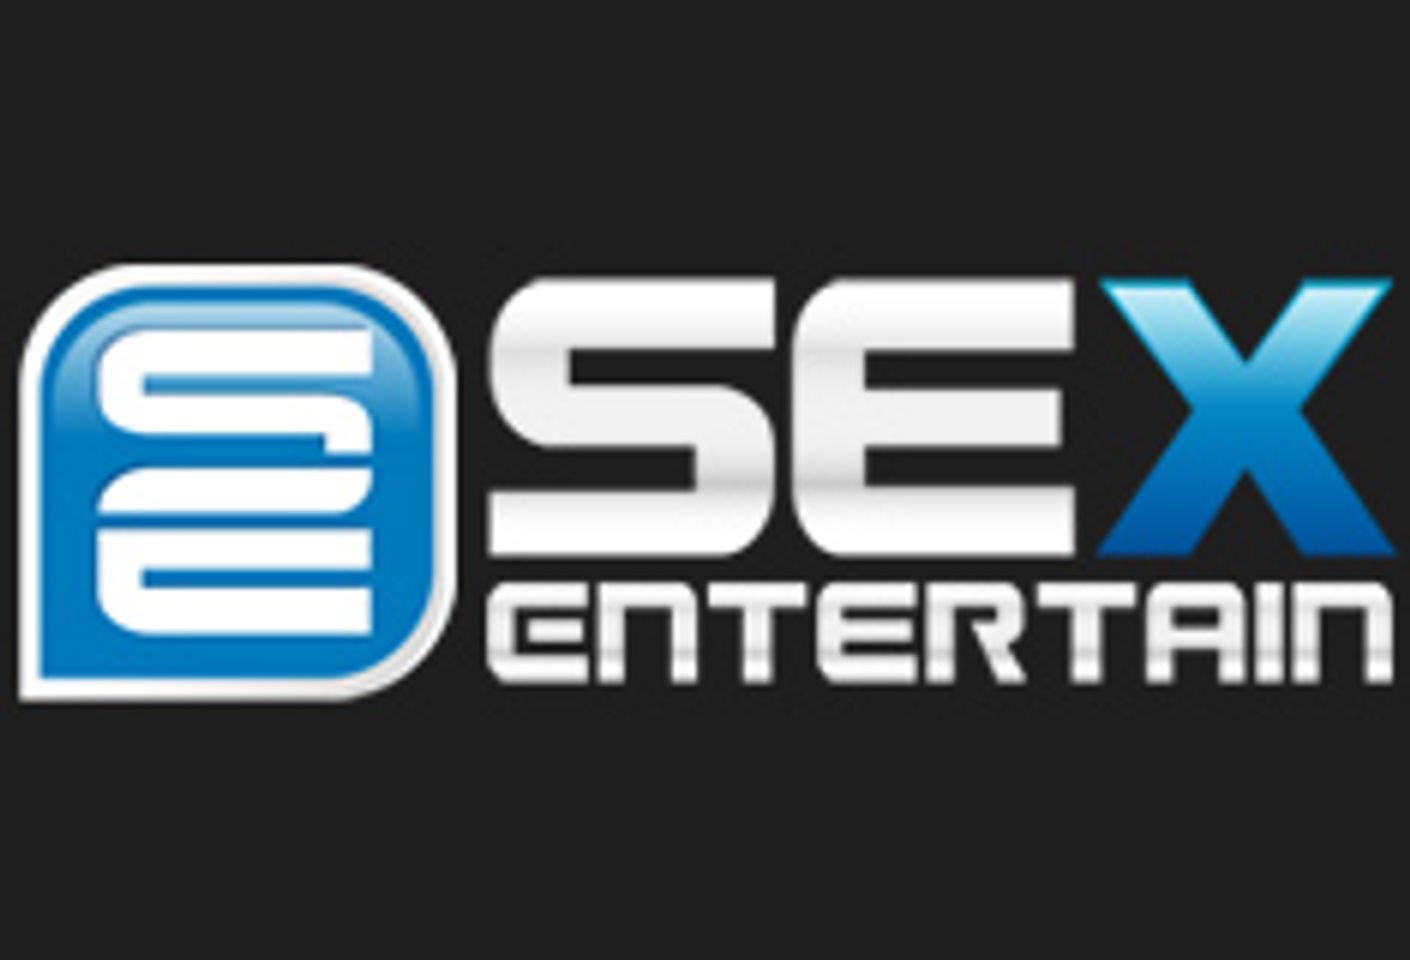 Sexentertain Presents 'Elite Dinner' at the Phoenix Forum